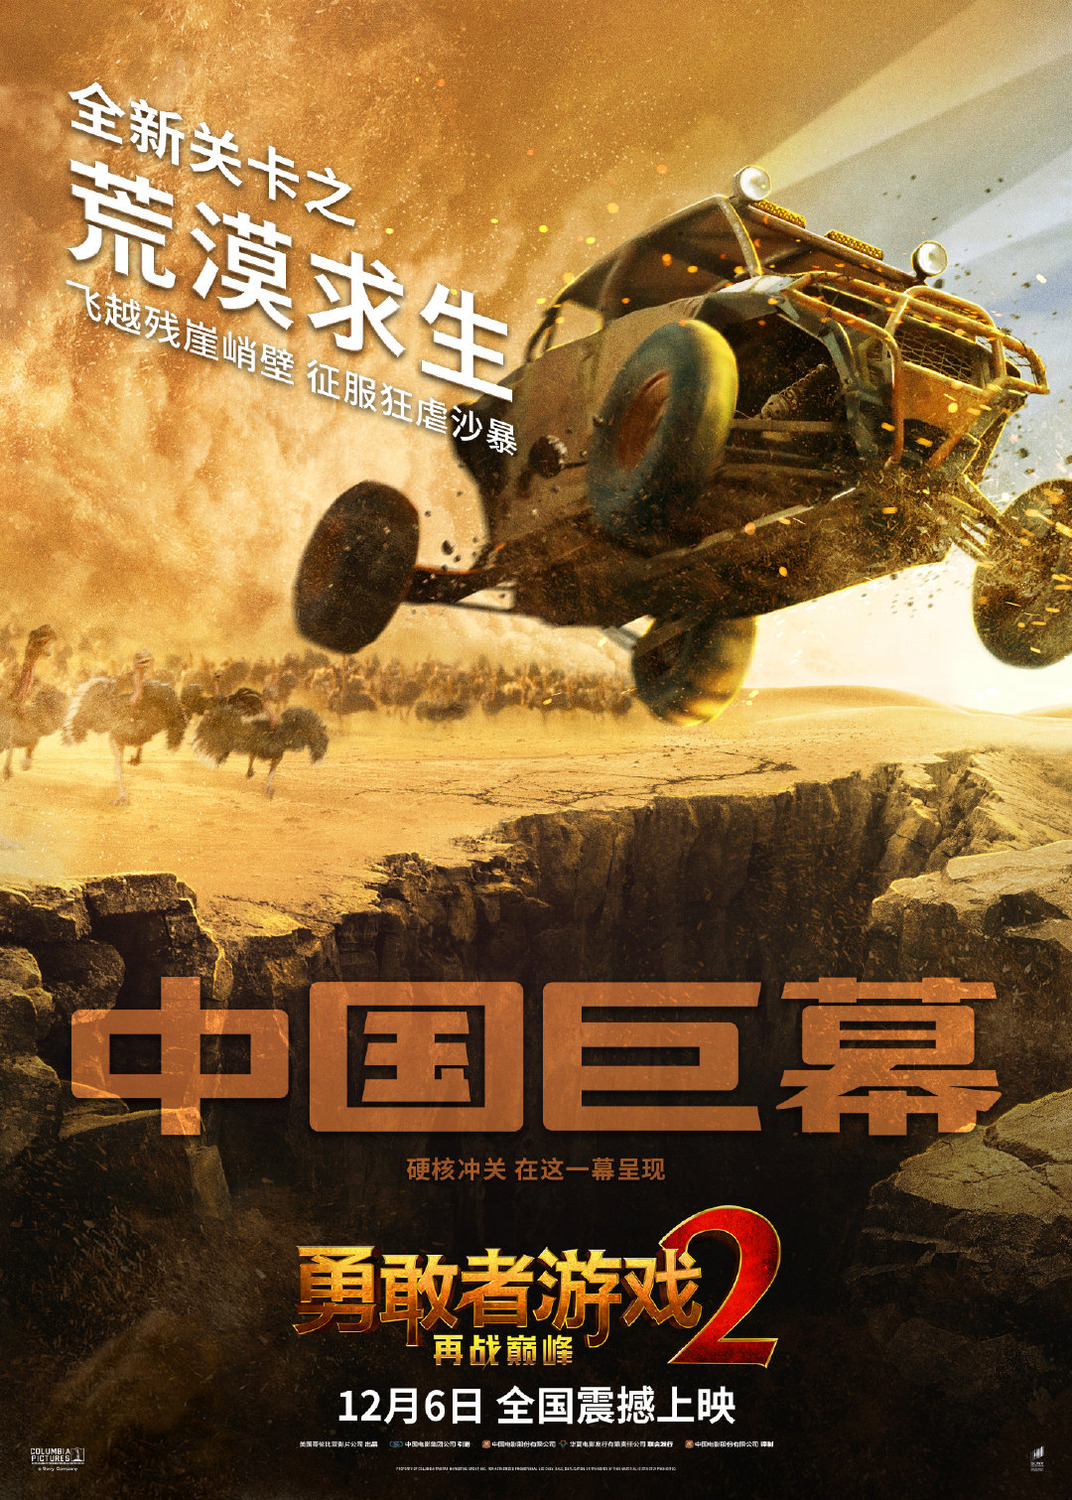 Extra Large Movie Poster Image for Jumanji: The Next Level (#20 of 24)